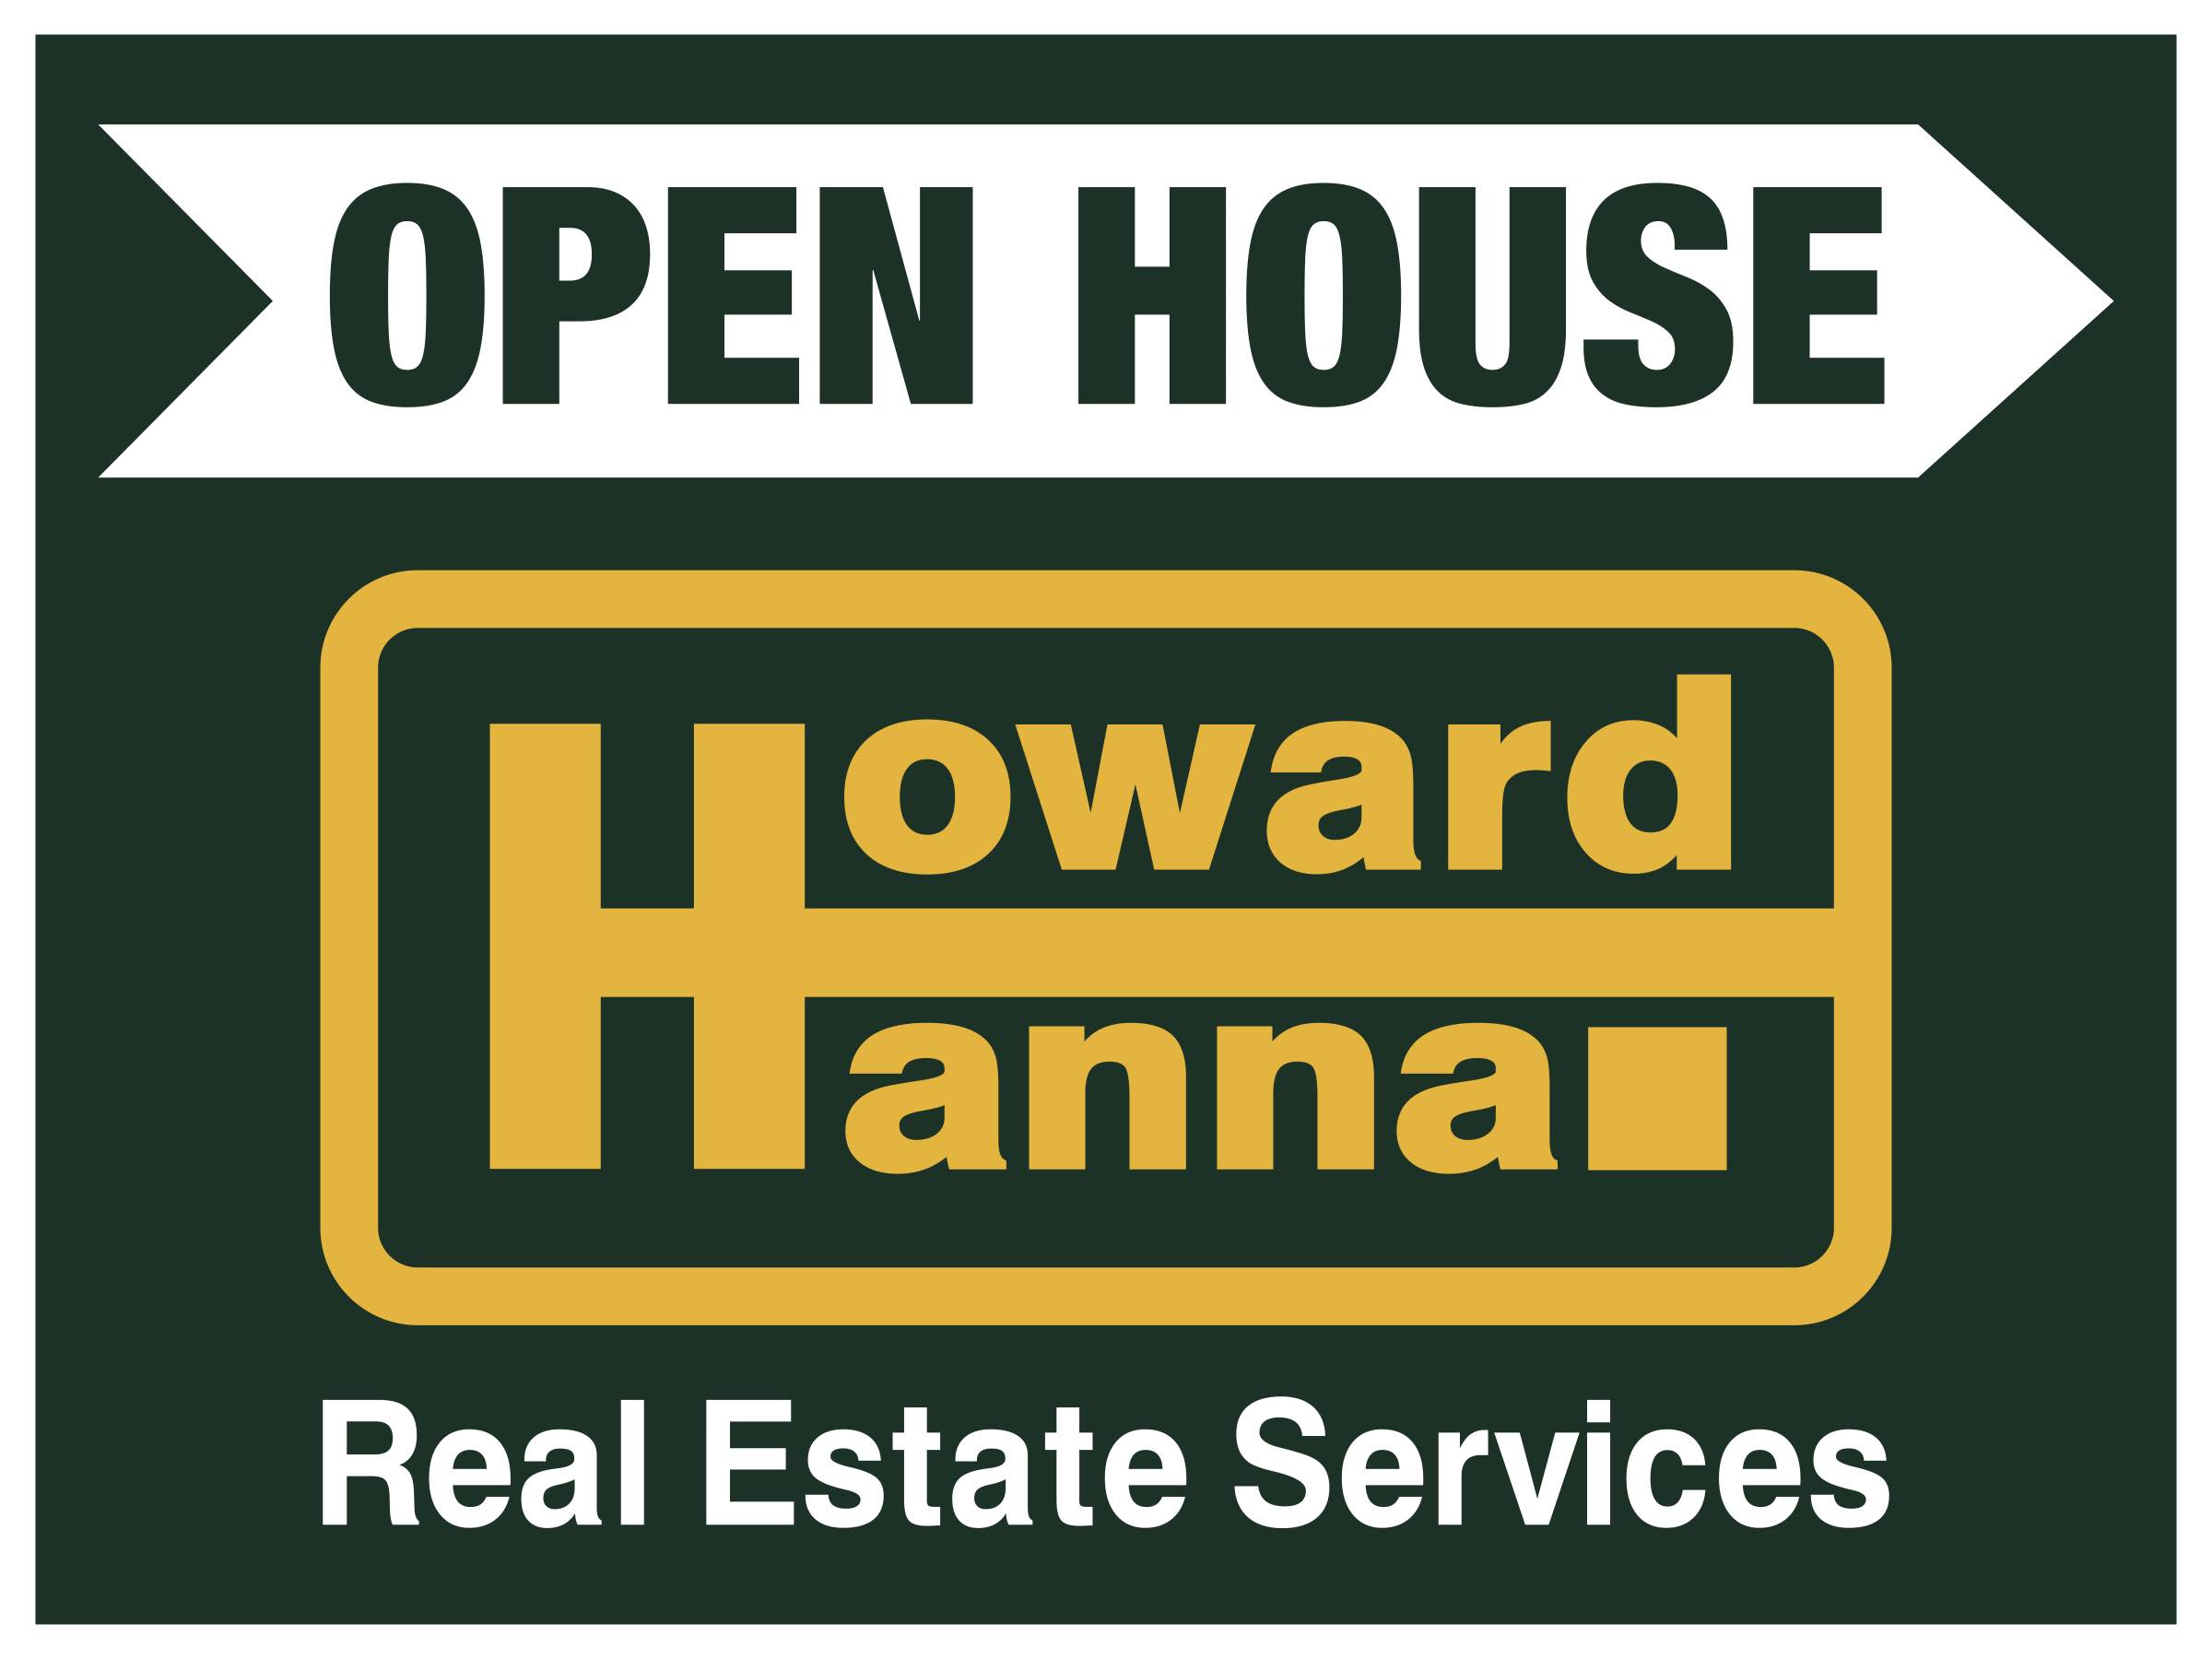 Generic Howard Hanna Real Estate Signage by Bokland Custom Visuals